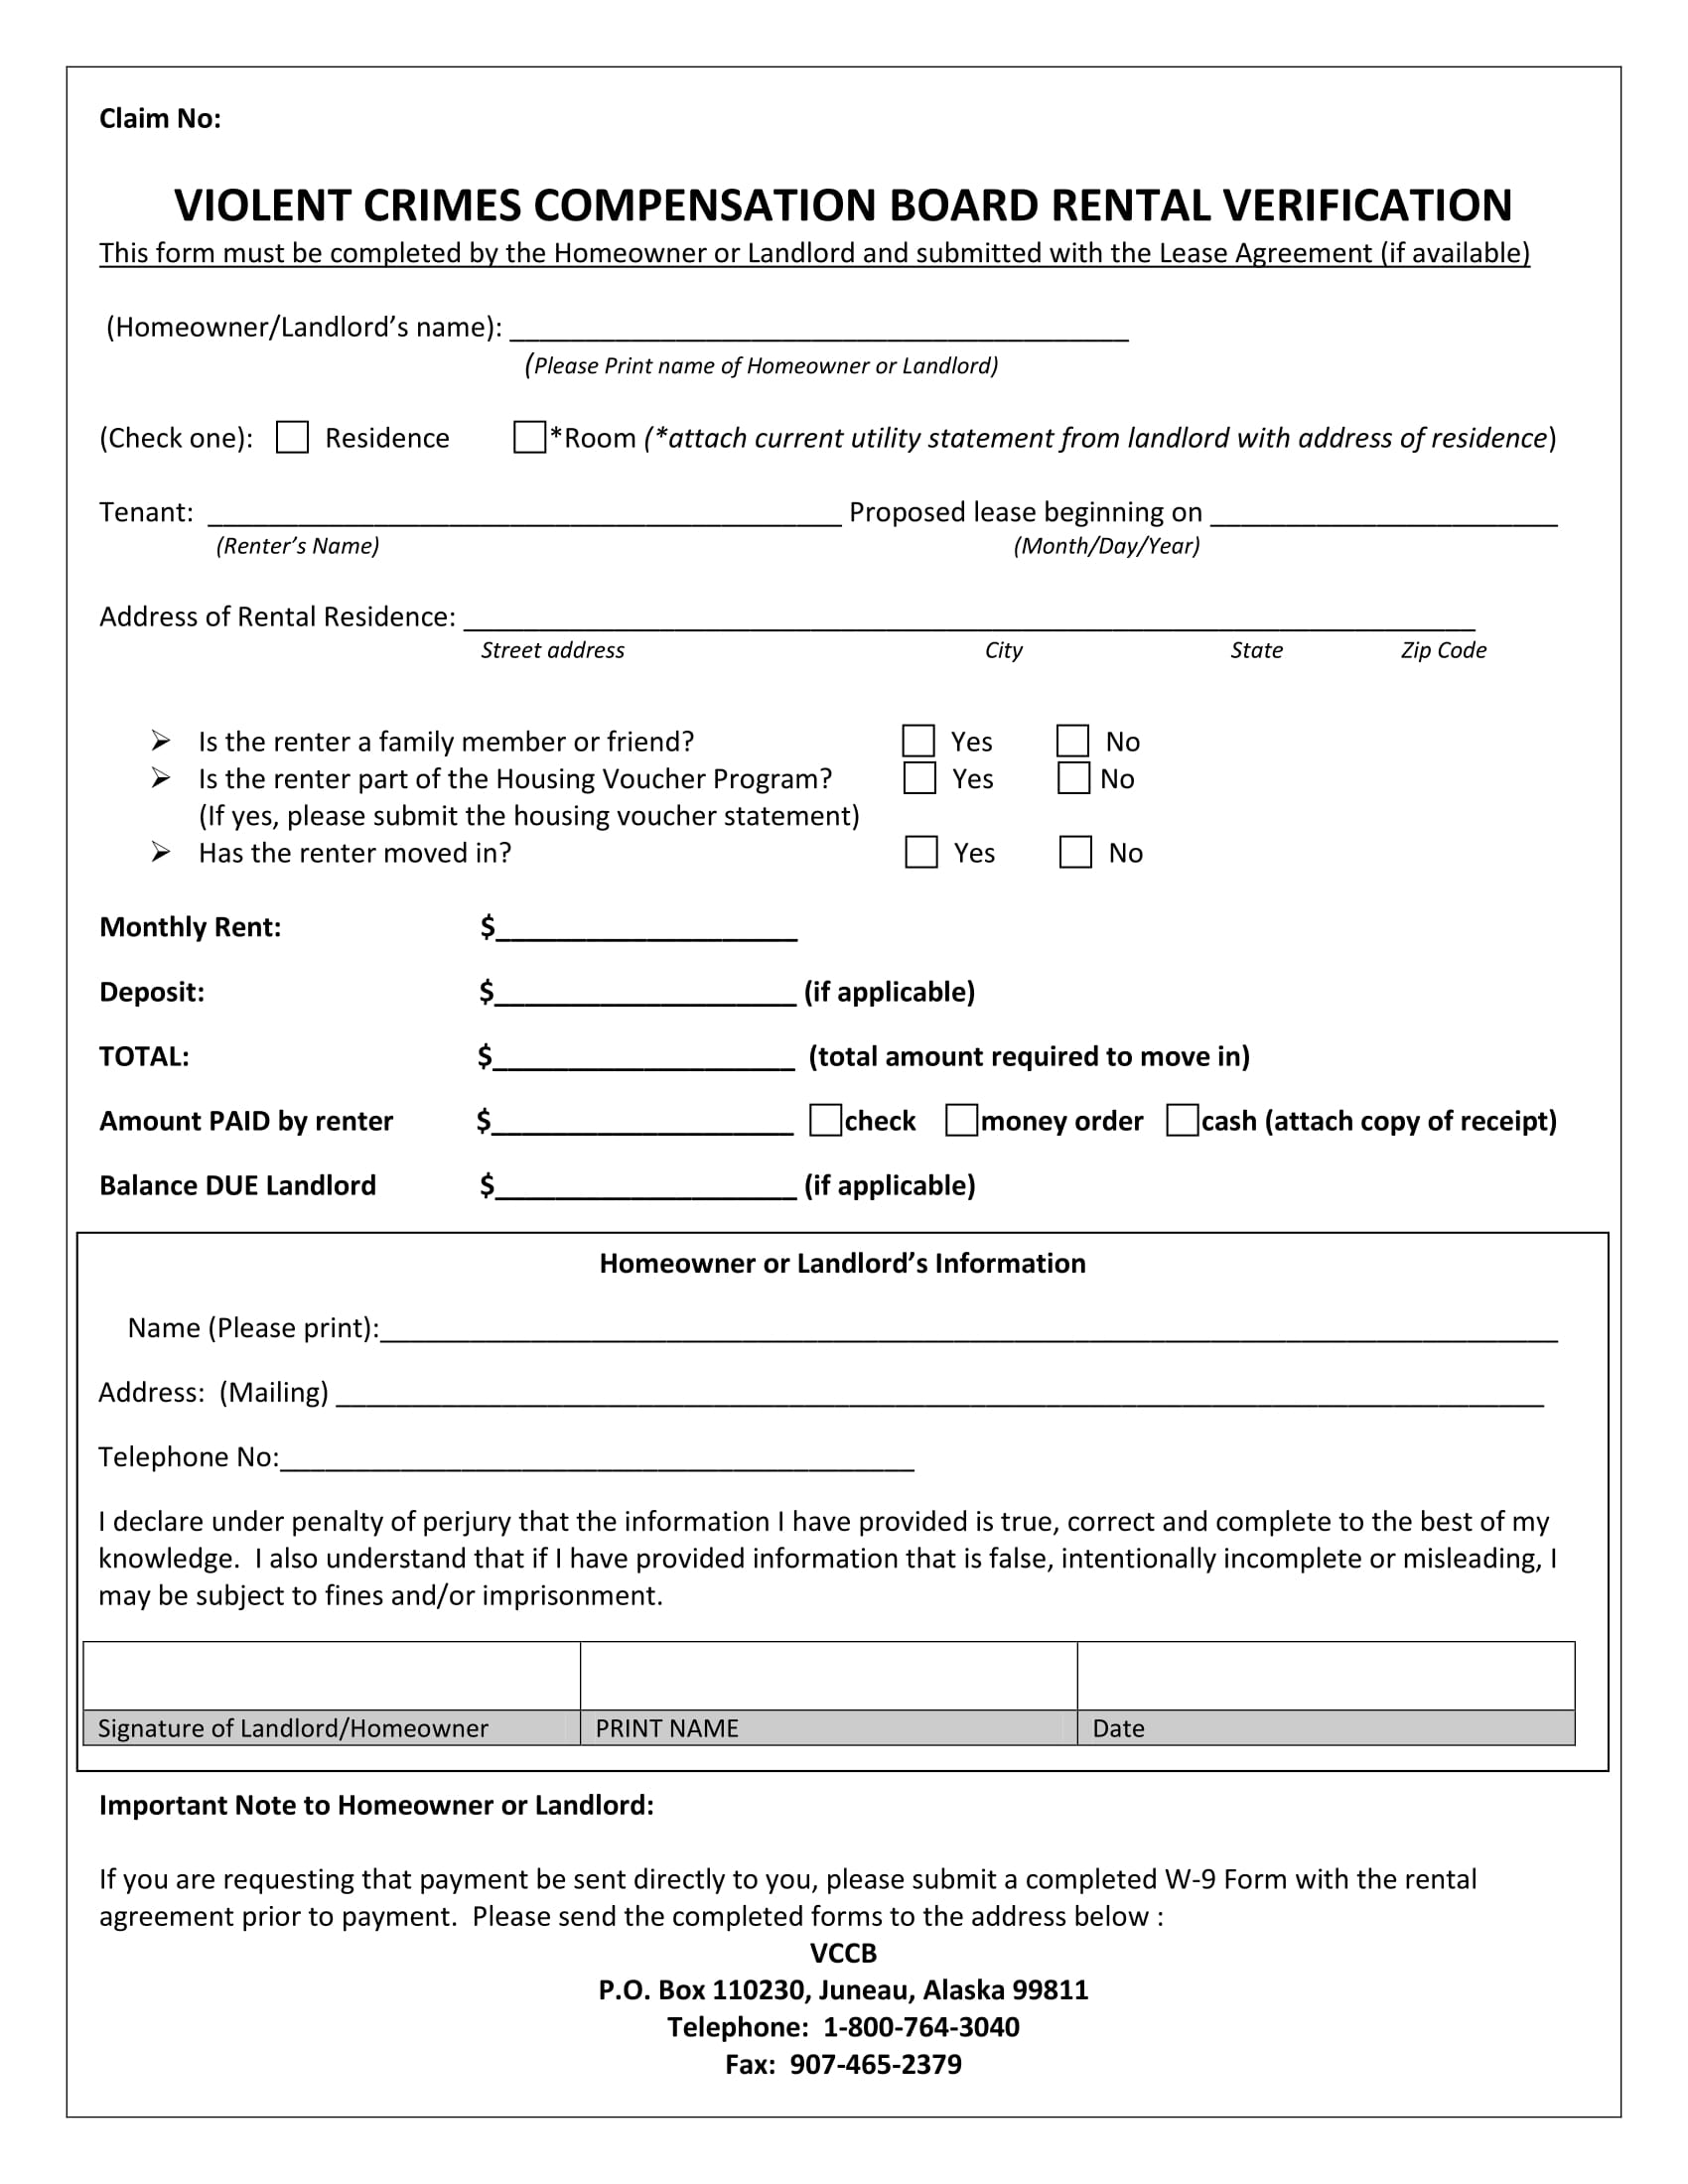 crimes board rental verification form 1